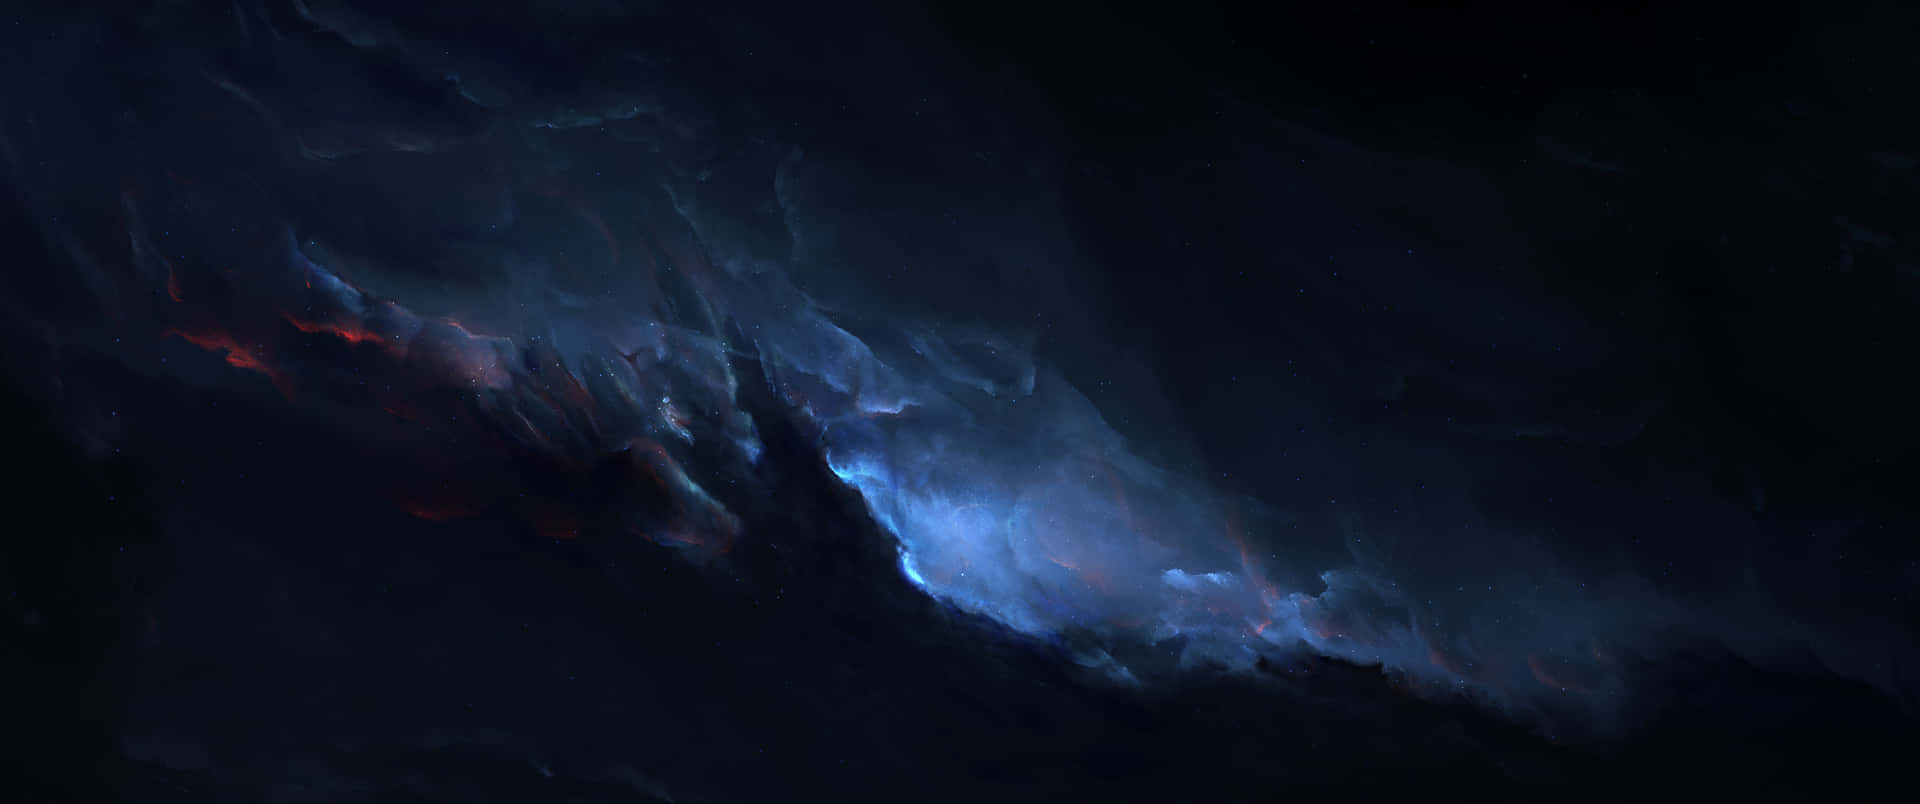 3440x1440pmörkblå Nebula Bakgrund